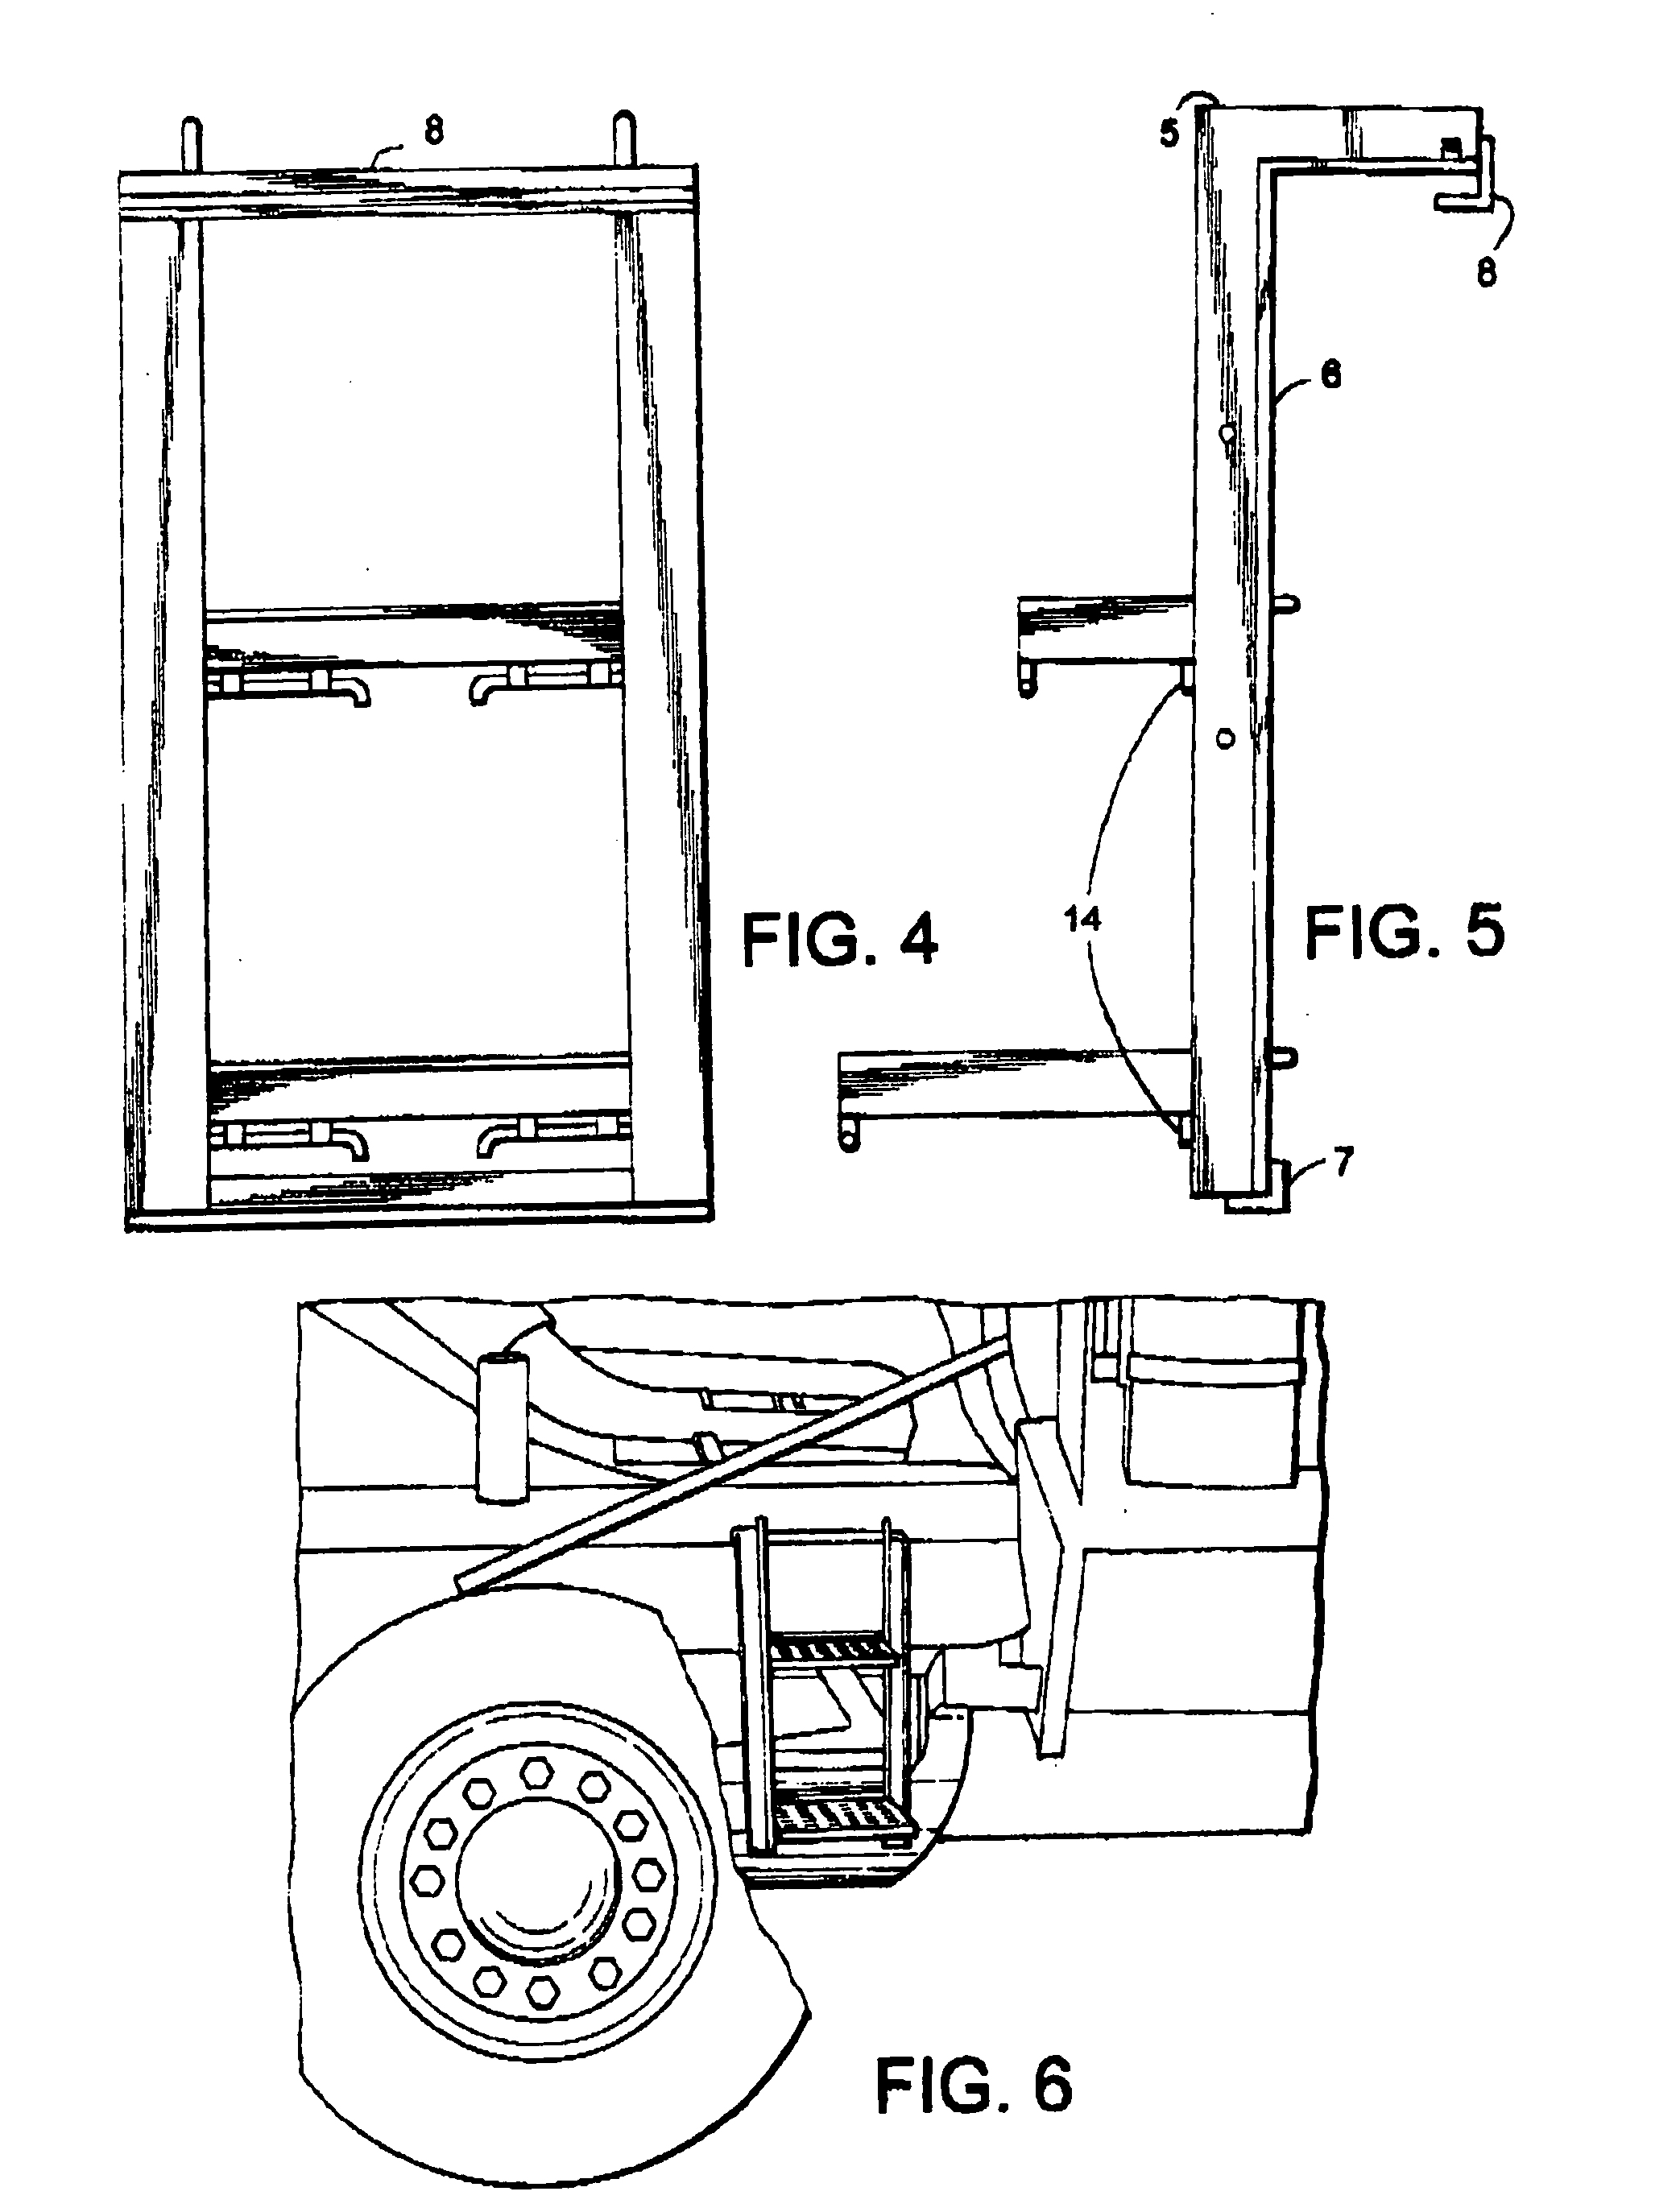 Truck engine compartment ladder